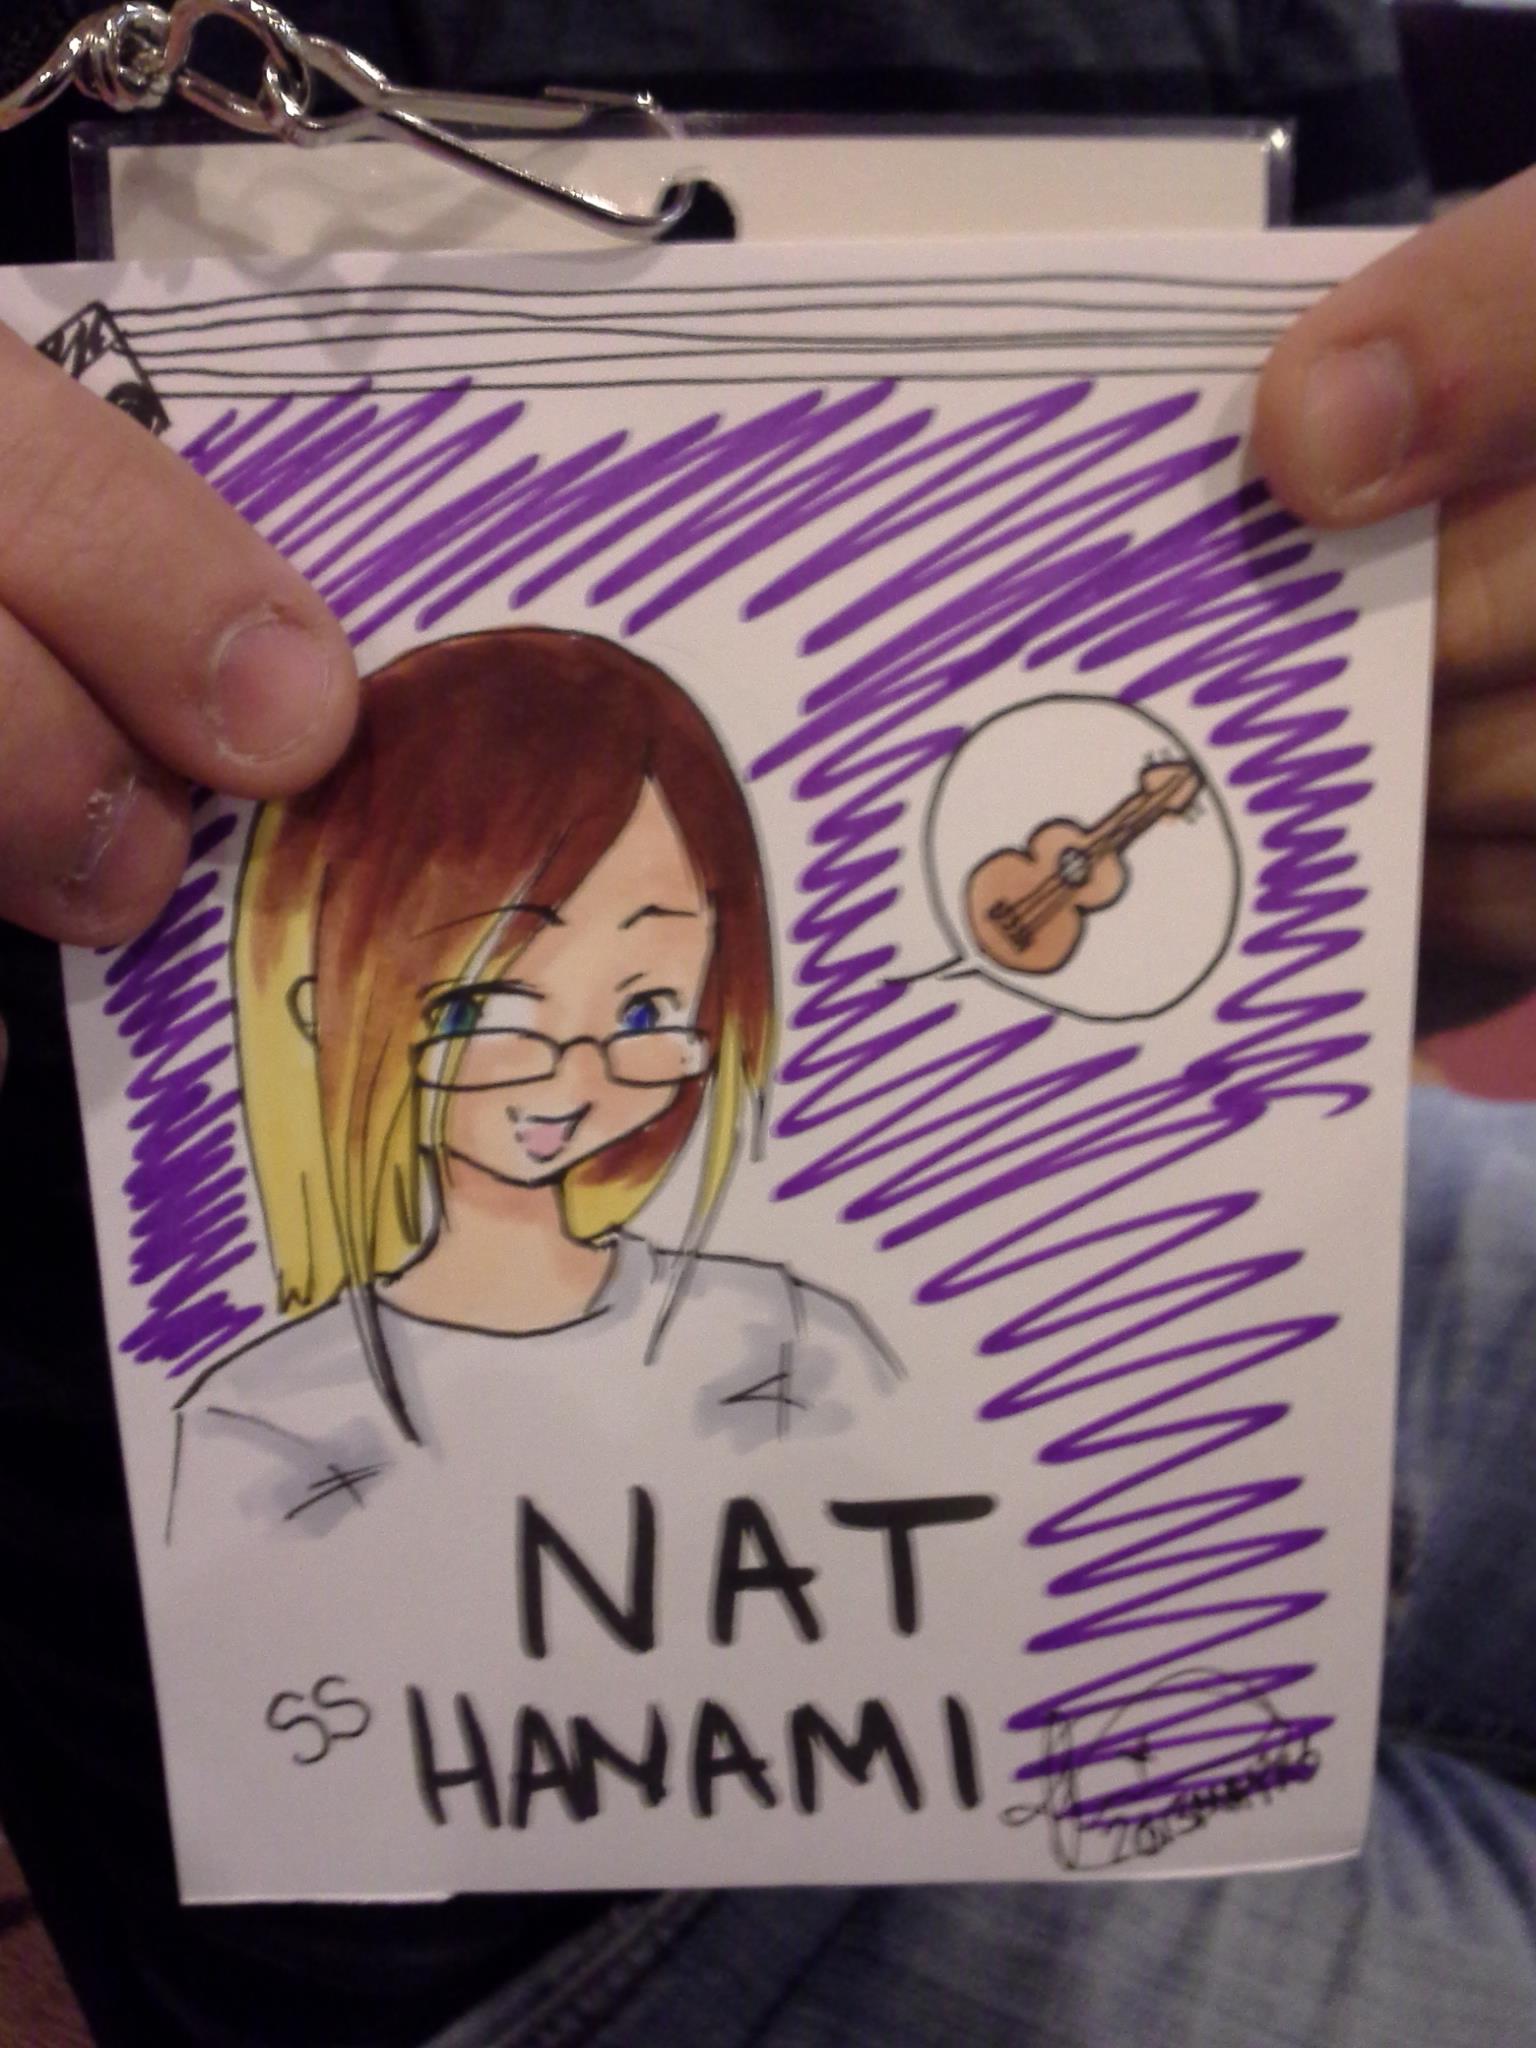 Beth [ hikaroo.deviantart.com ] drew custom badges for us at BelleCon. Here's Nat